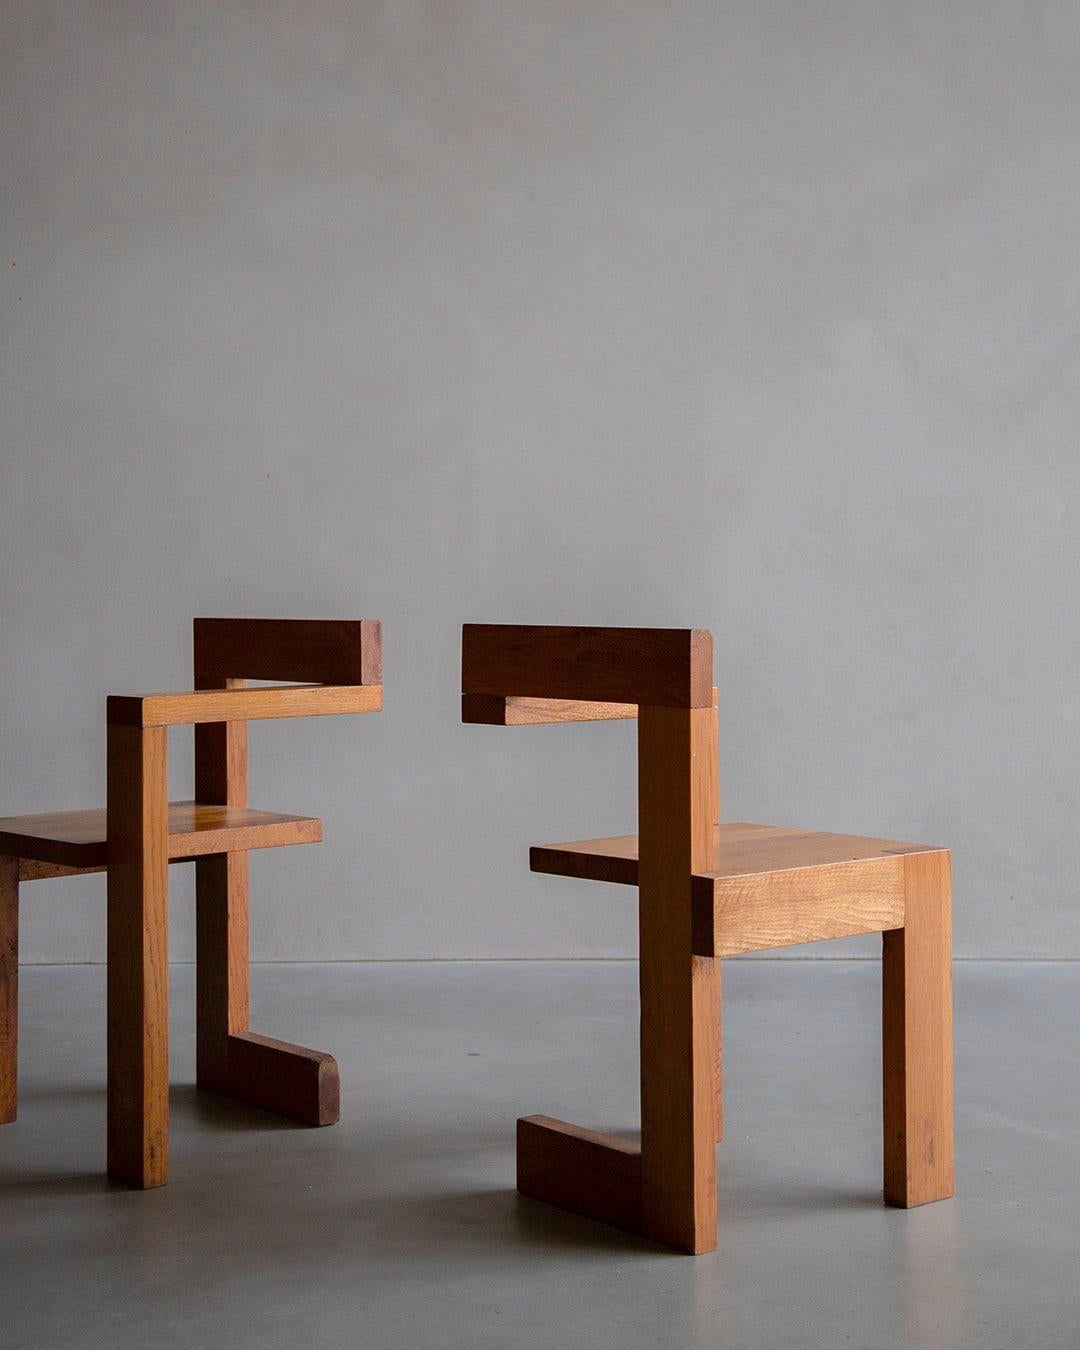 Late 20th Century Manner Of Gerrit Rietveld - Steltman Chair - 1970s Dutch interpretation For Sale